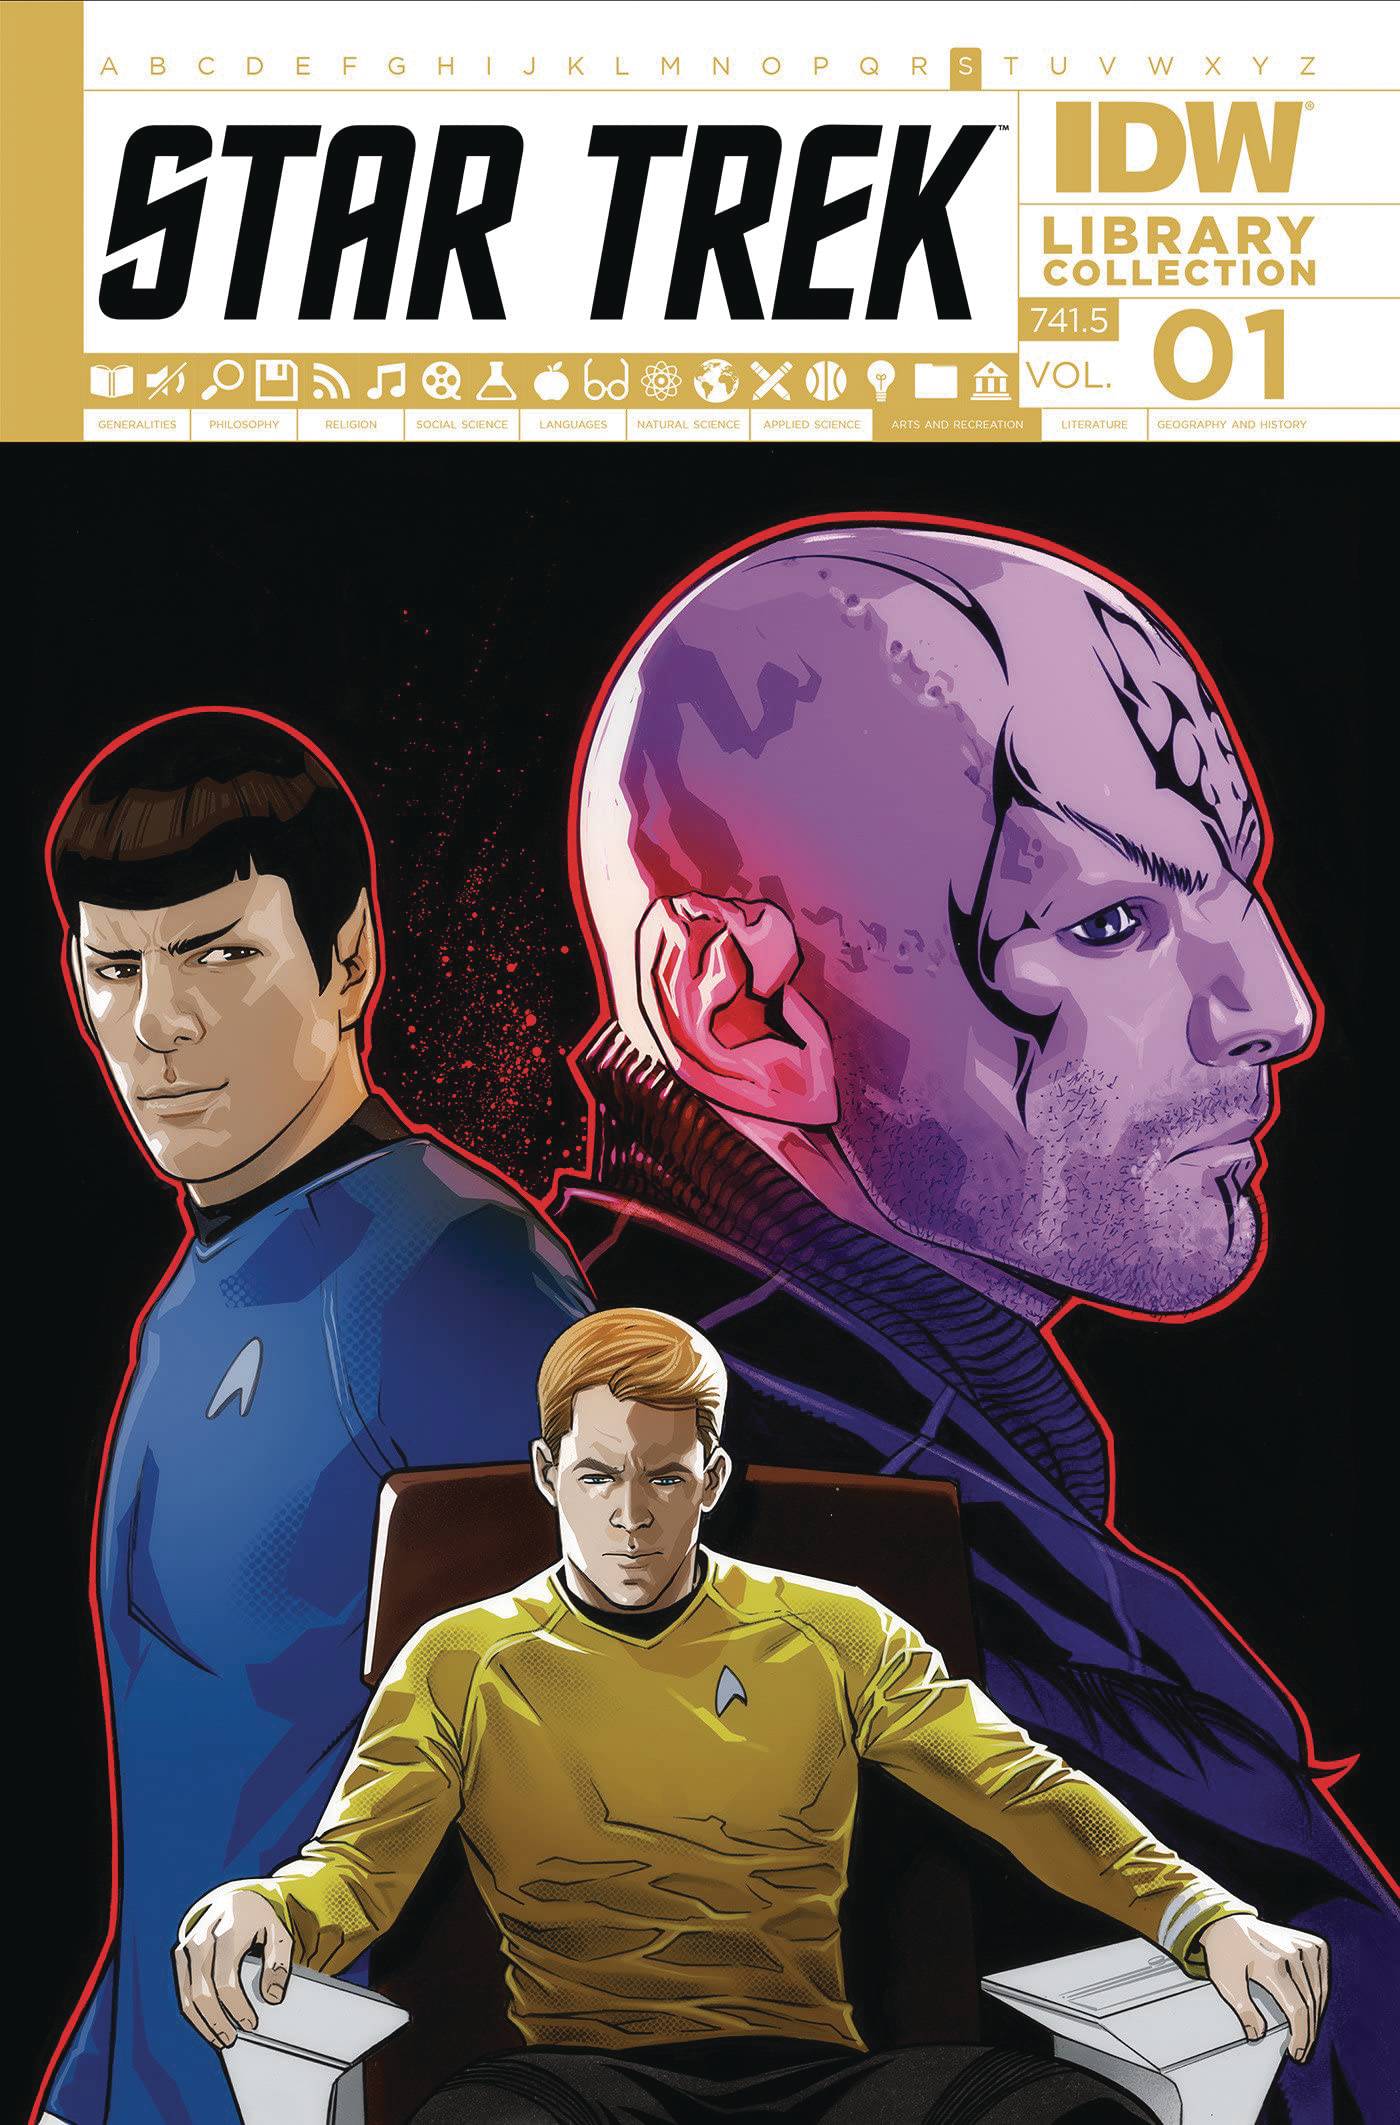 Star Trek Vol. 1 (Library Collection) Fresh Comics